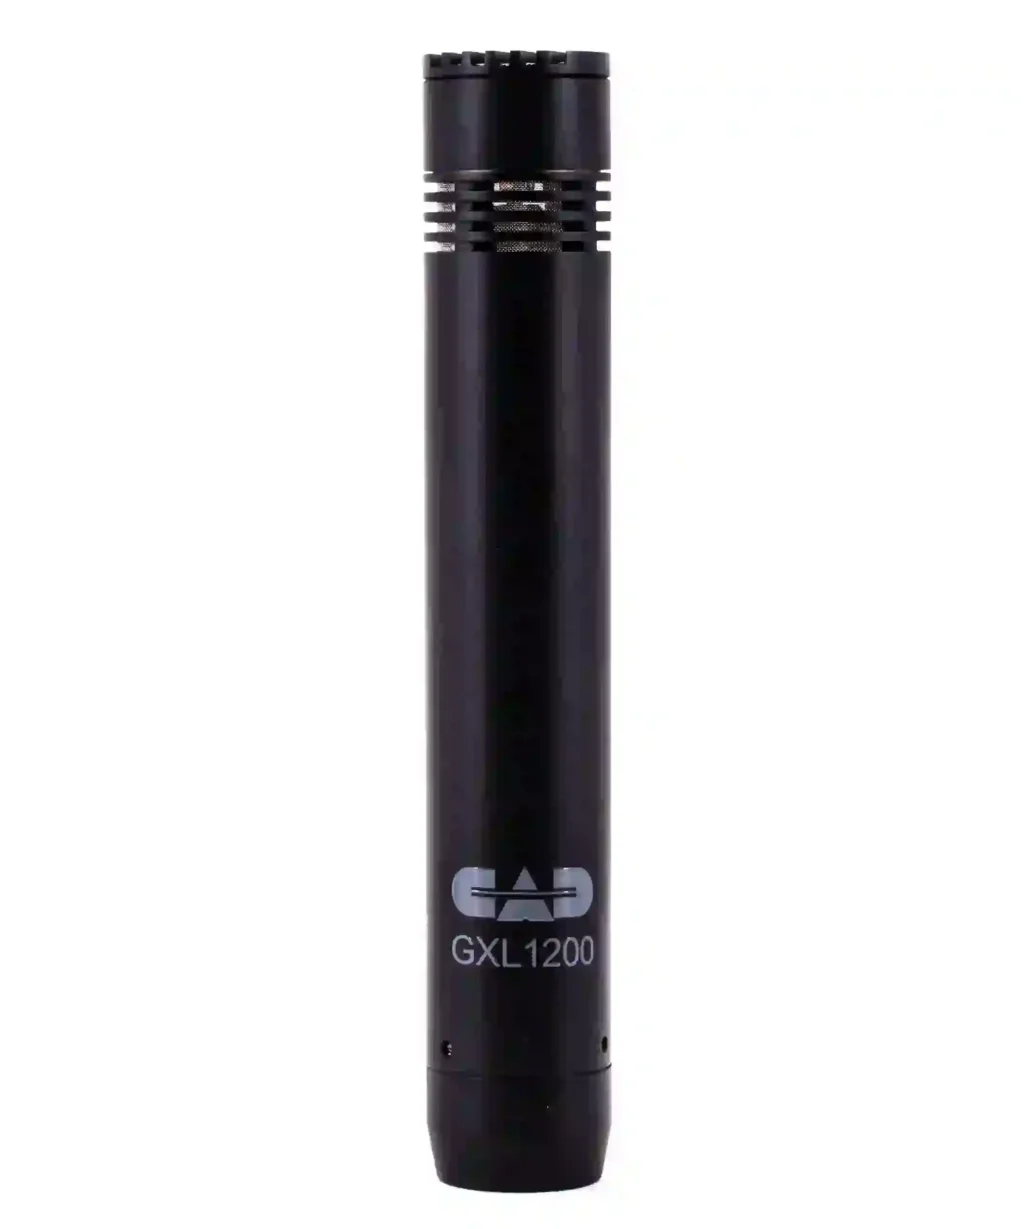 Micro Cad Gxl1200 [1]